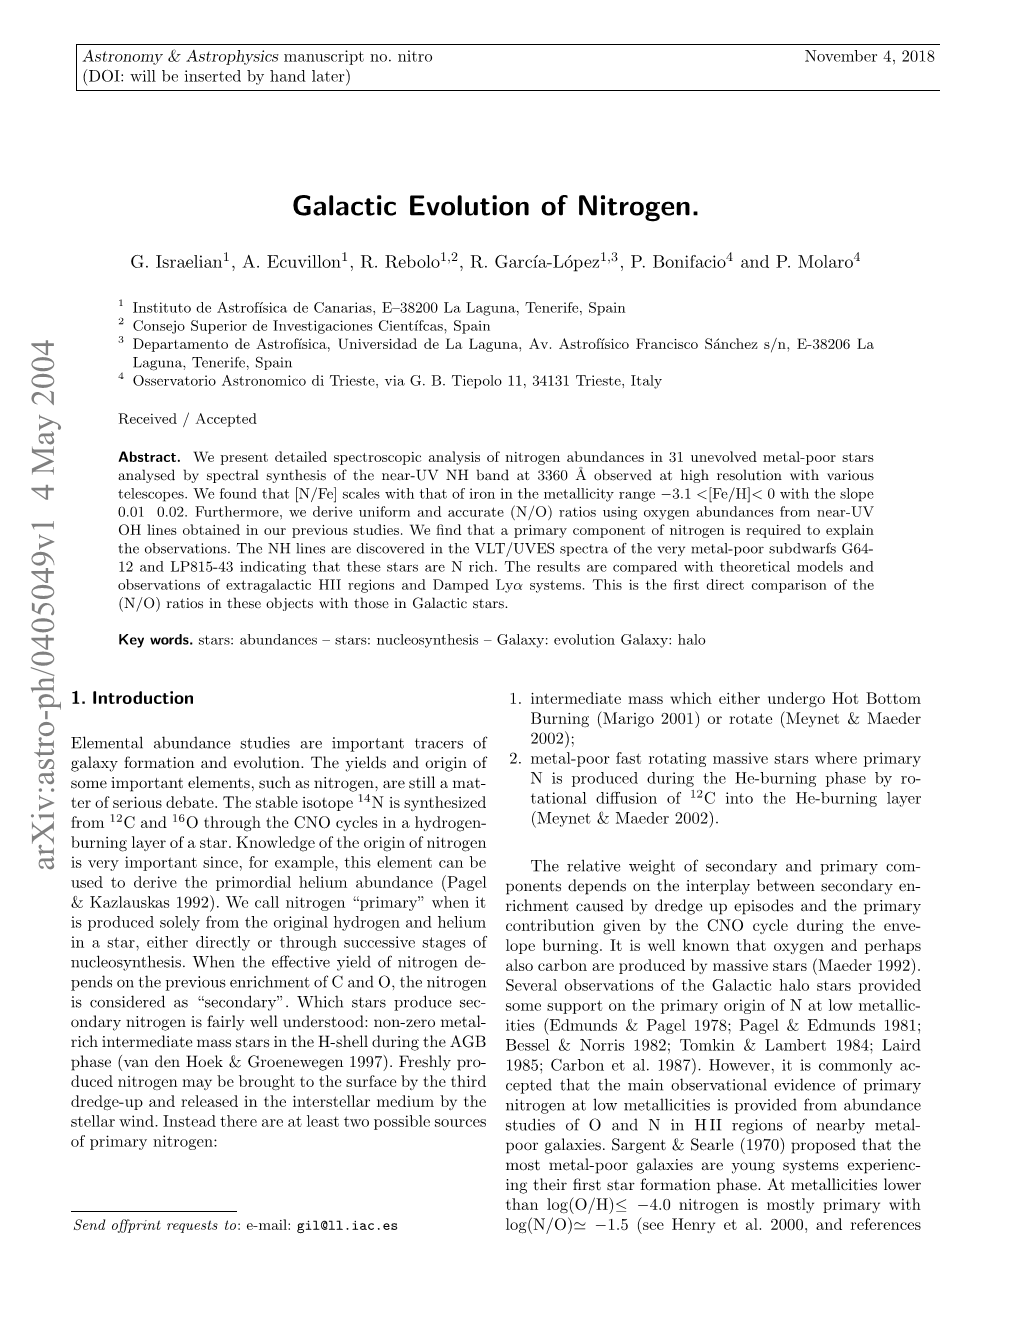 Galactic Evolution of Nitrogen